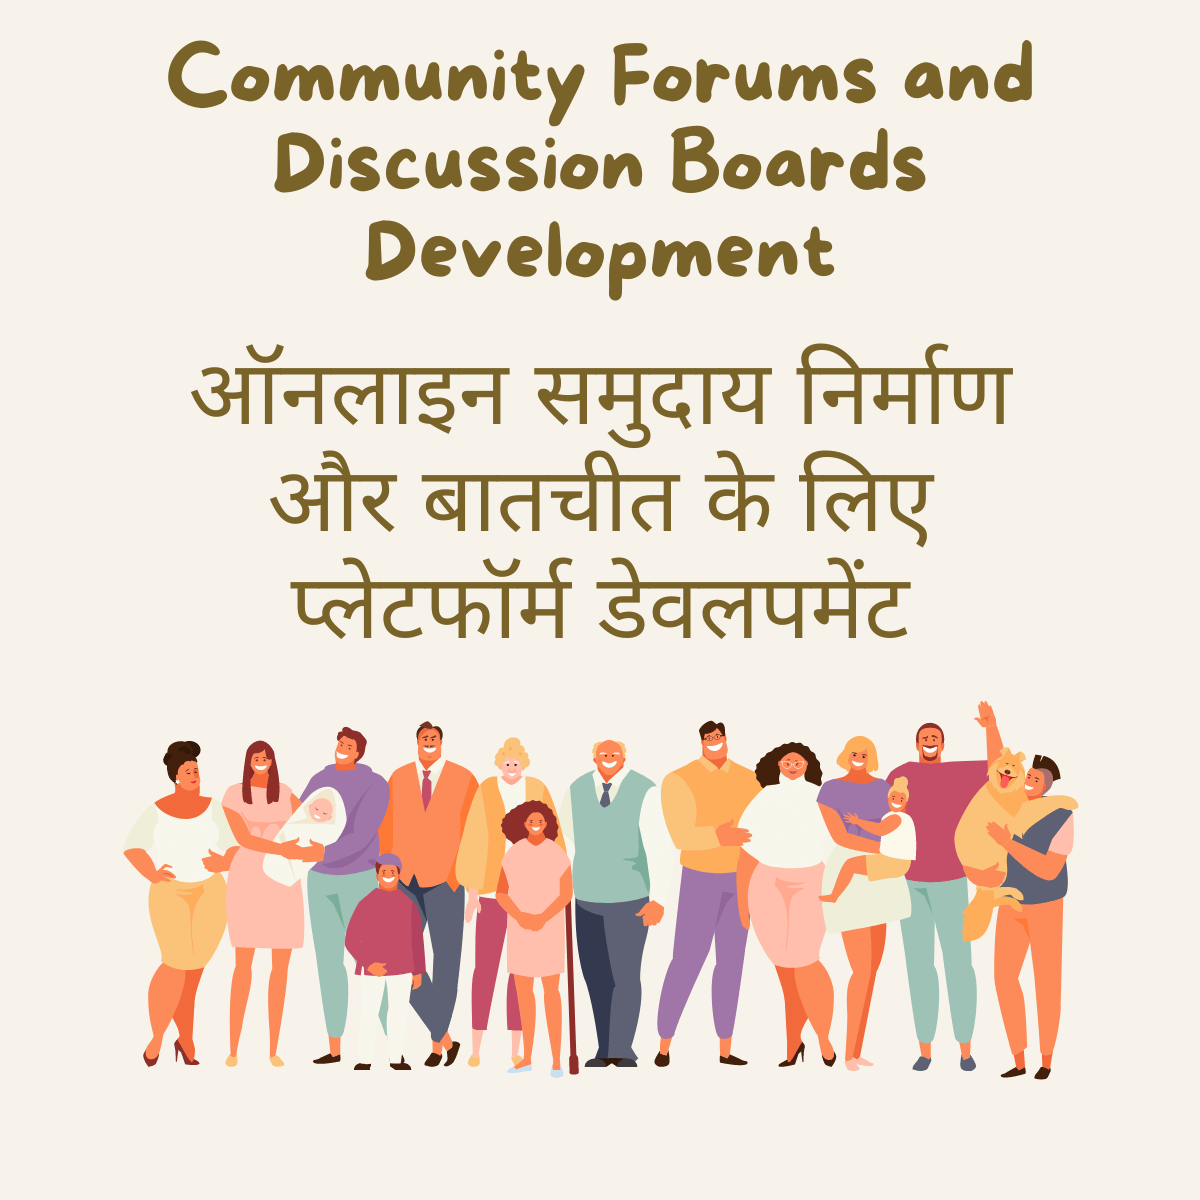 Community Forums and Discussion Boards Development ऑनलाइन समुदाय निर्माण और बातचीत के लिए प्लेटफॉर्म डेवलपमेंट